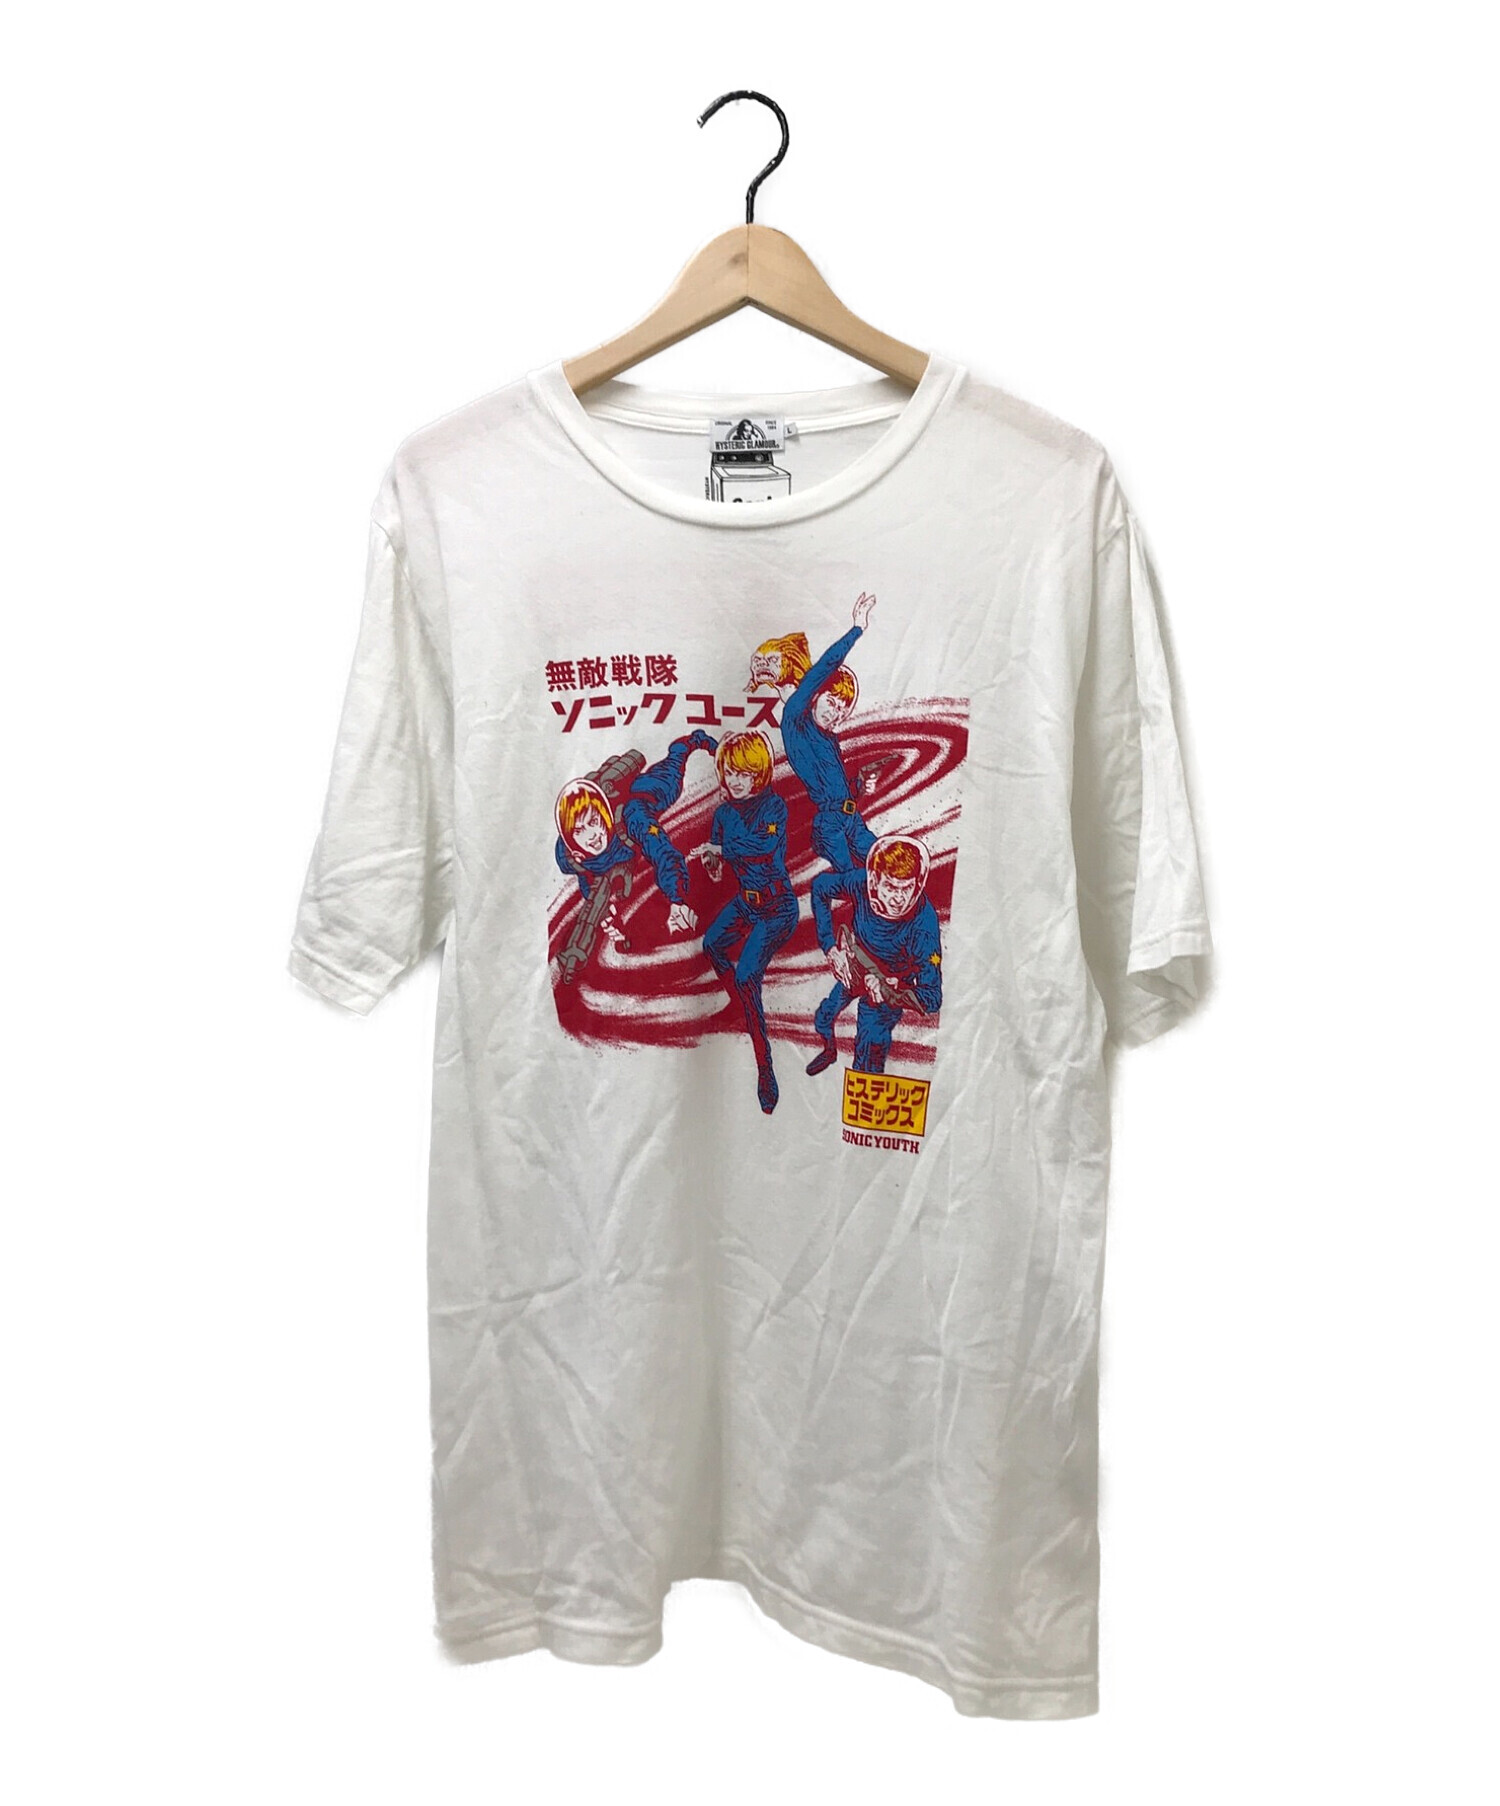 Hysteric Glamour (ヒステリックグラマー) SONIC YOUTH/HYSTERIC COMICS Tシャツ ホワイト サイズ:L